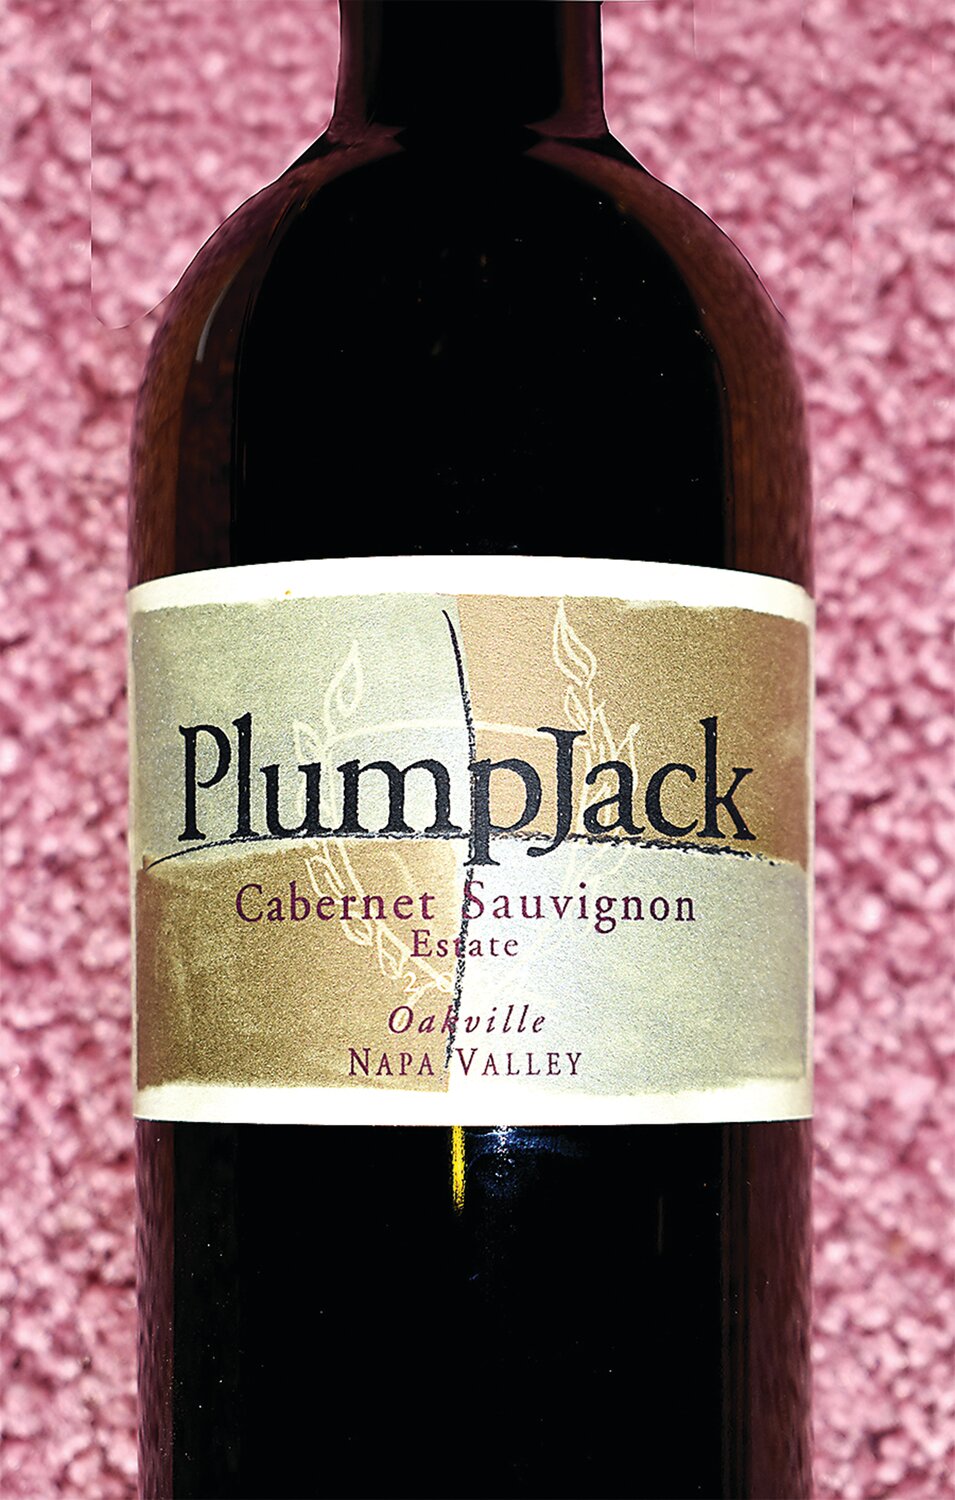 The PlumpJack Cabernet Sauvignon label.